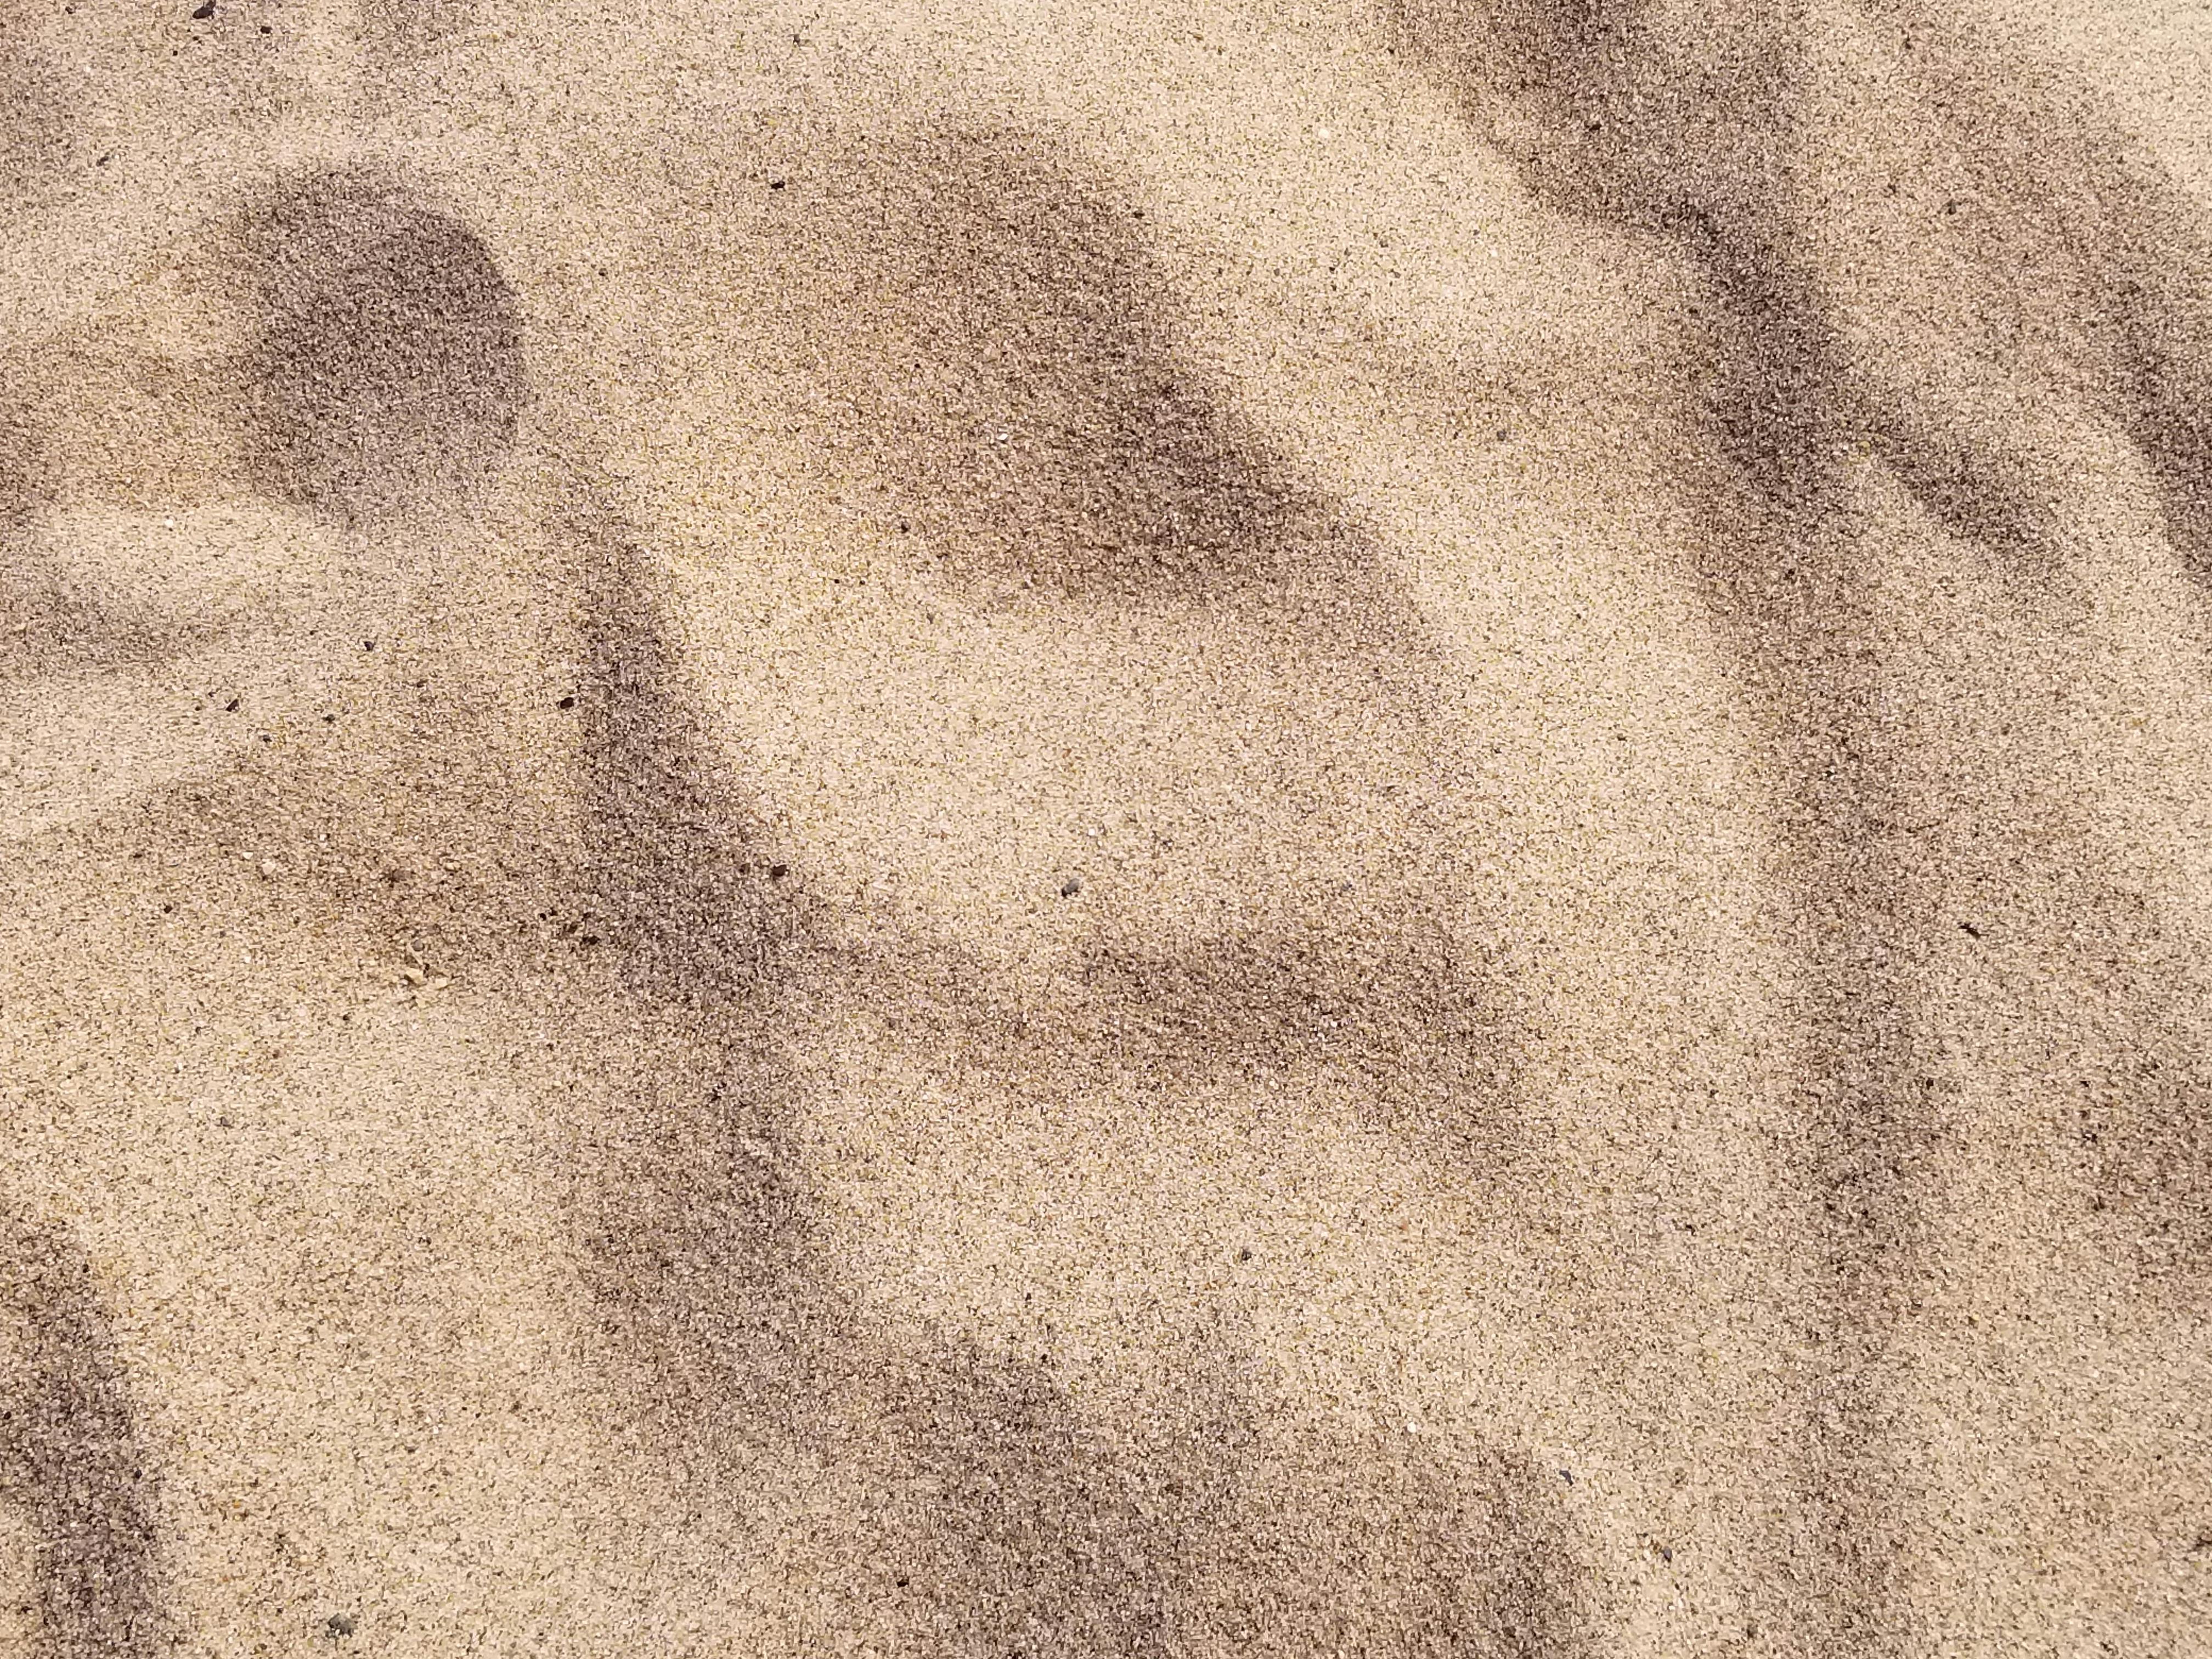 Free Stock Photo Of Beach Sand Texture